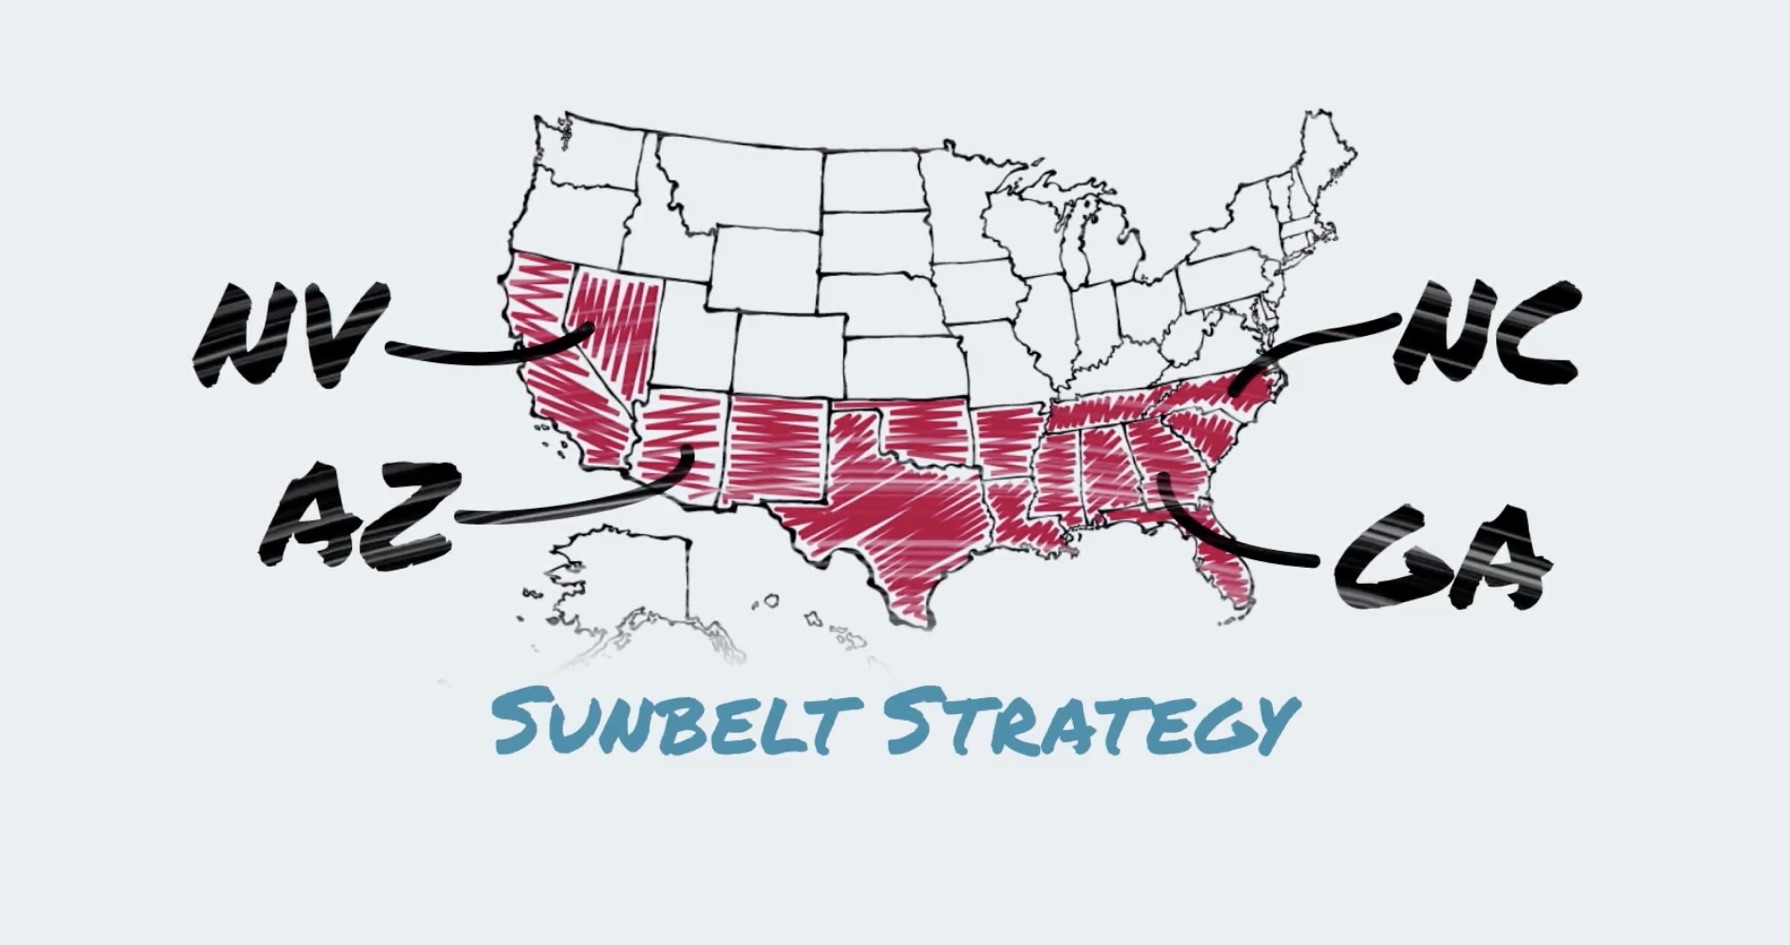 NV, AZ, NC, GA Subelt Strategy